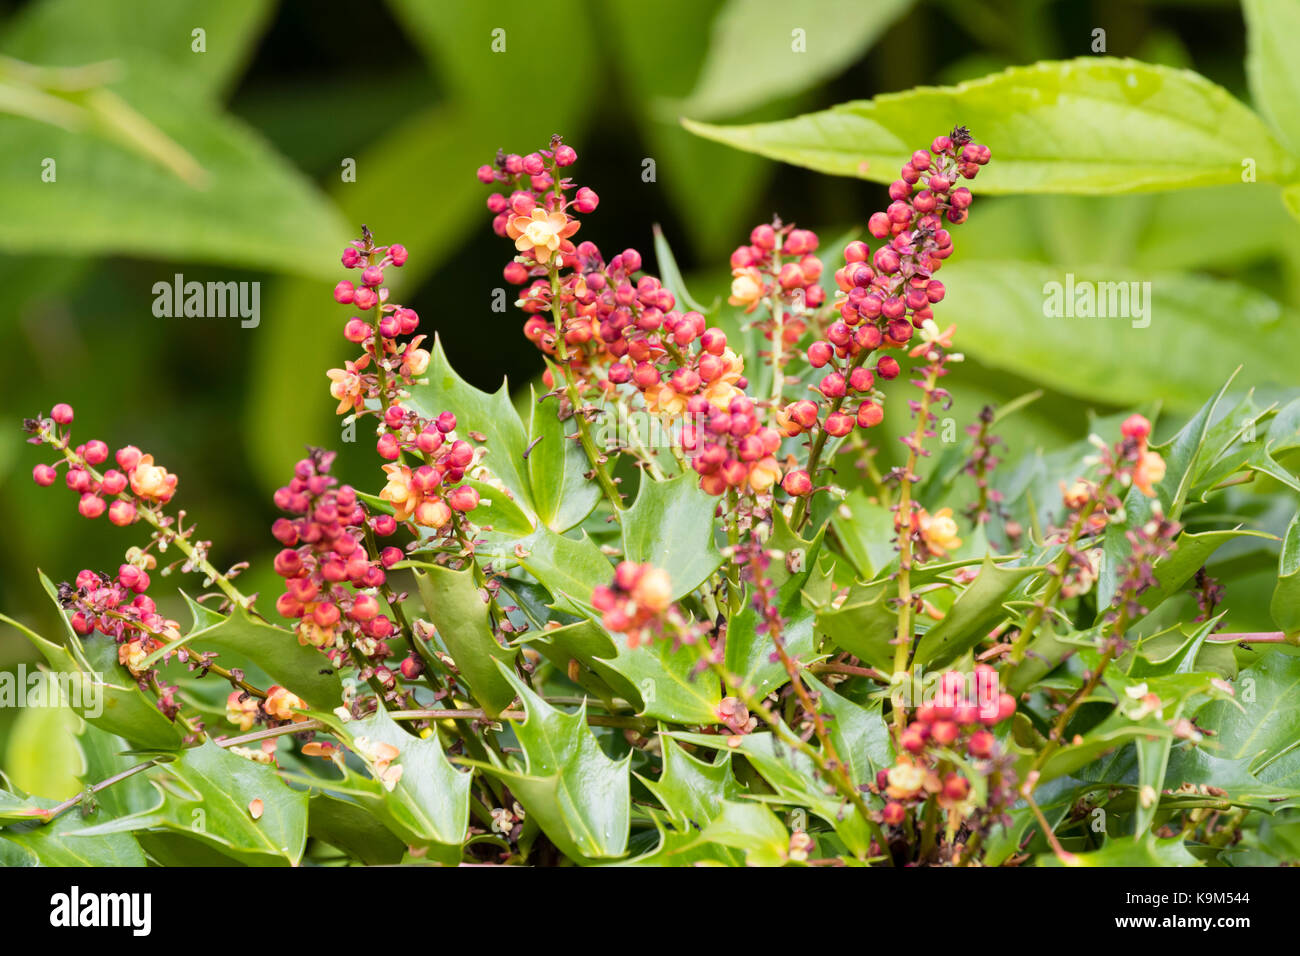 Blütenrispen mit roten Knospen und Blüten der immergrünen, Herbst Winter blühender Strauch, Mahonia nitens 'Kabarett' Stockfoto